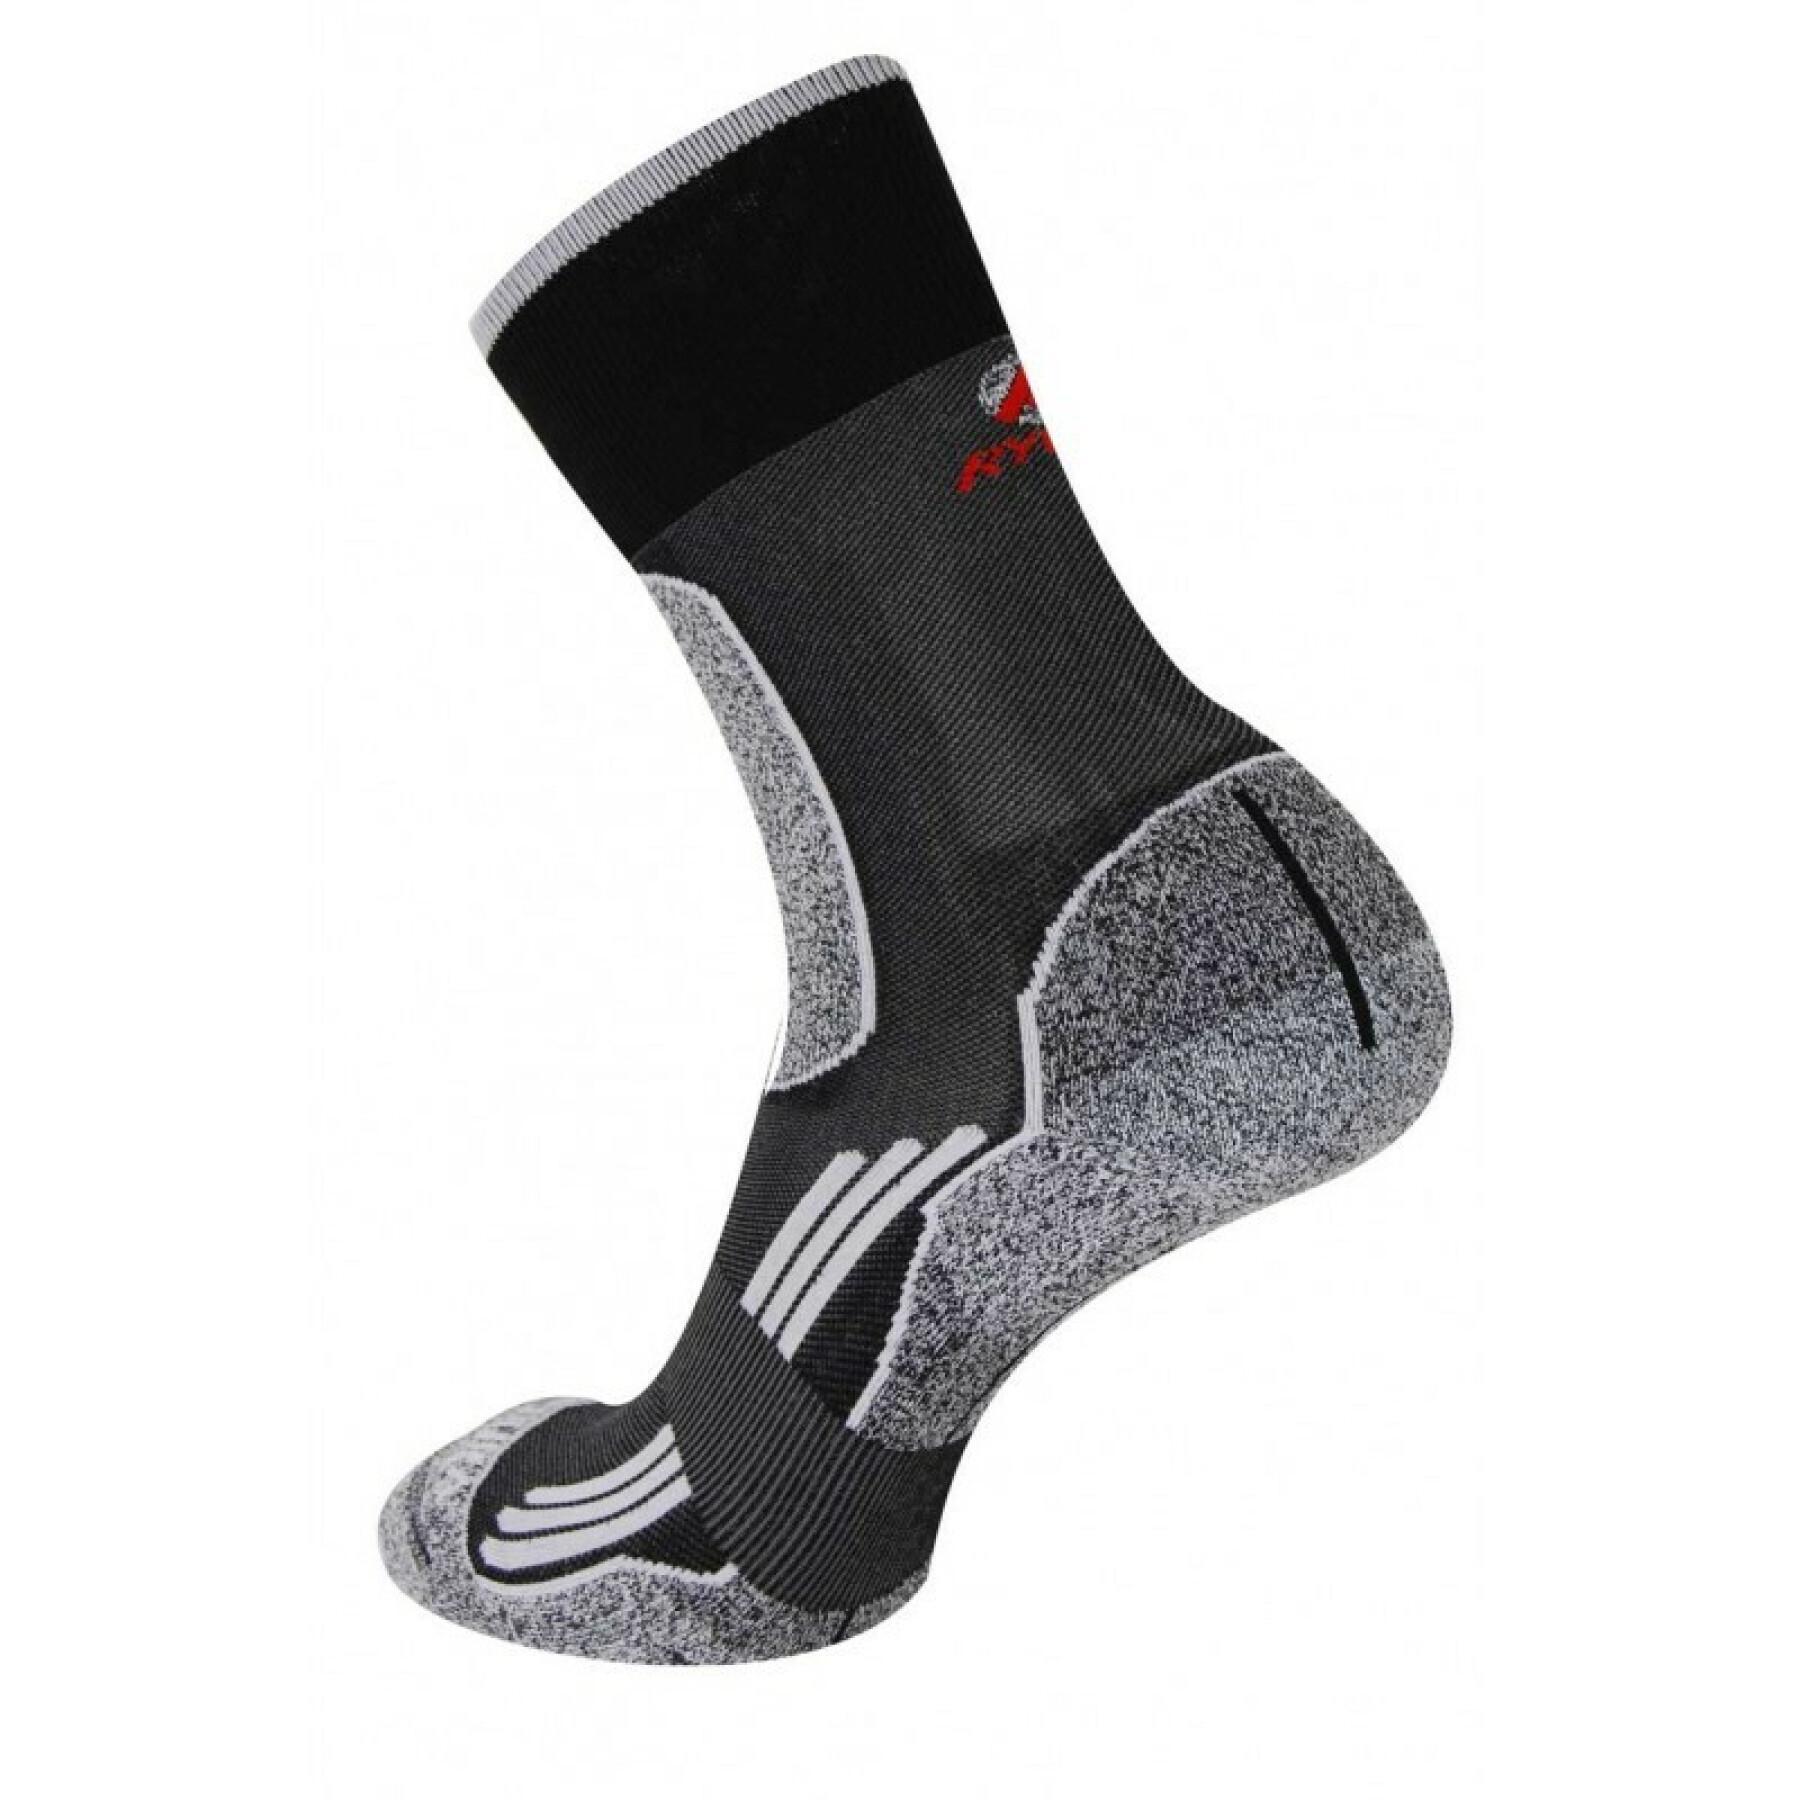 Socks the indestructible Rywan No Limit Walk